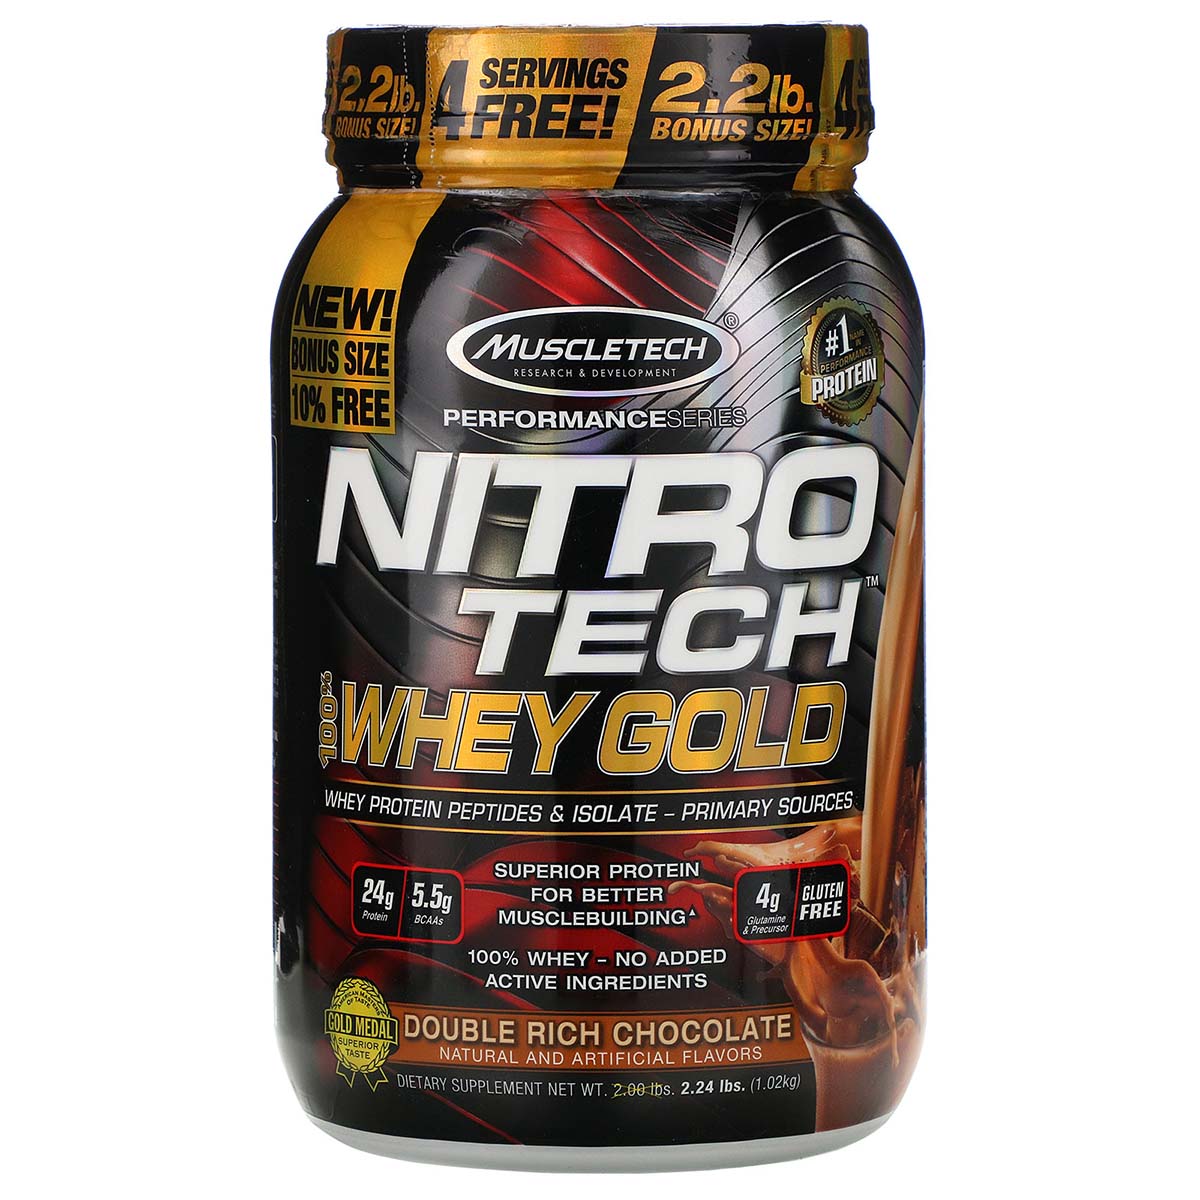 Muscletech Nitro Tech Whey Gold 2.2 LB Double Rich Chocolate